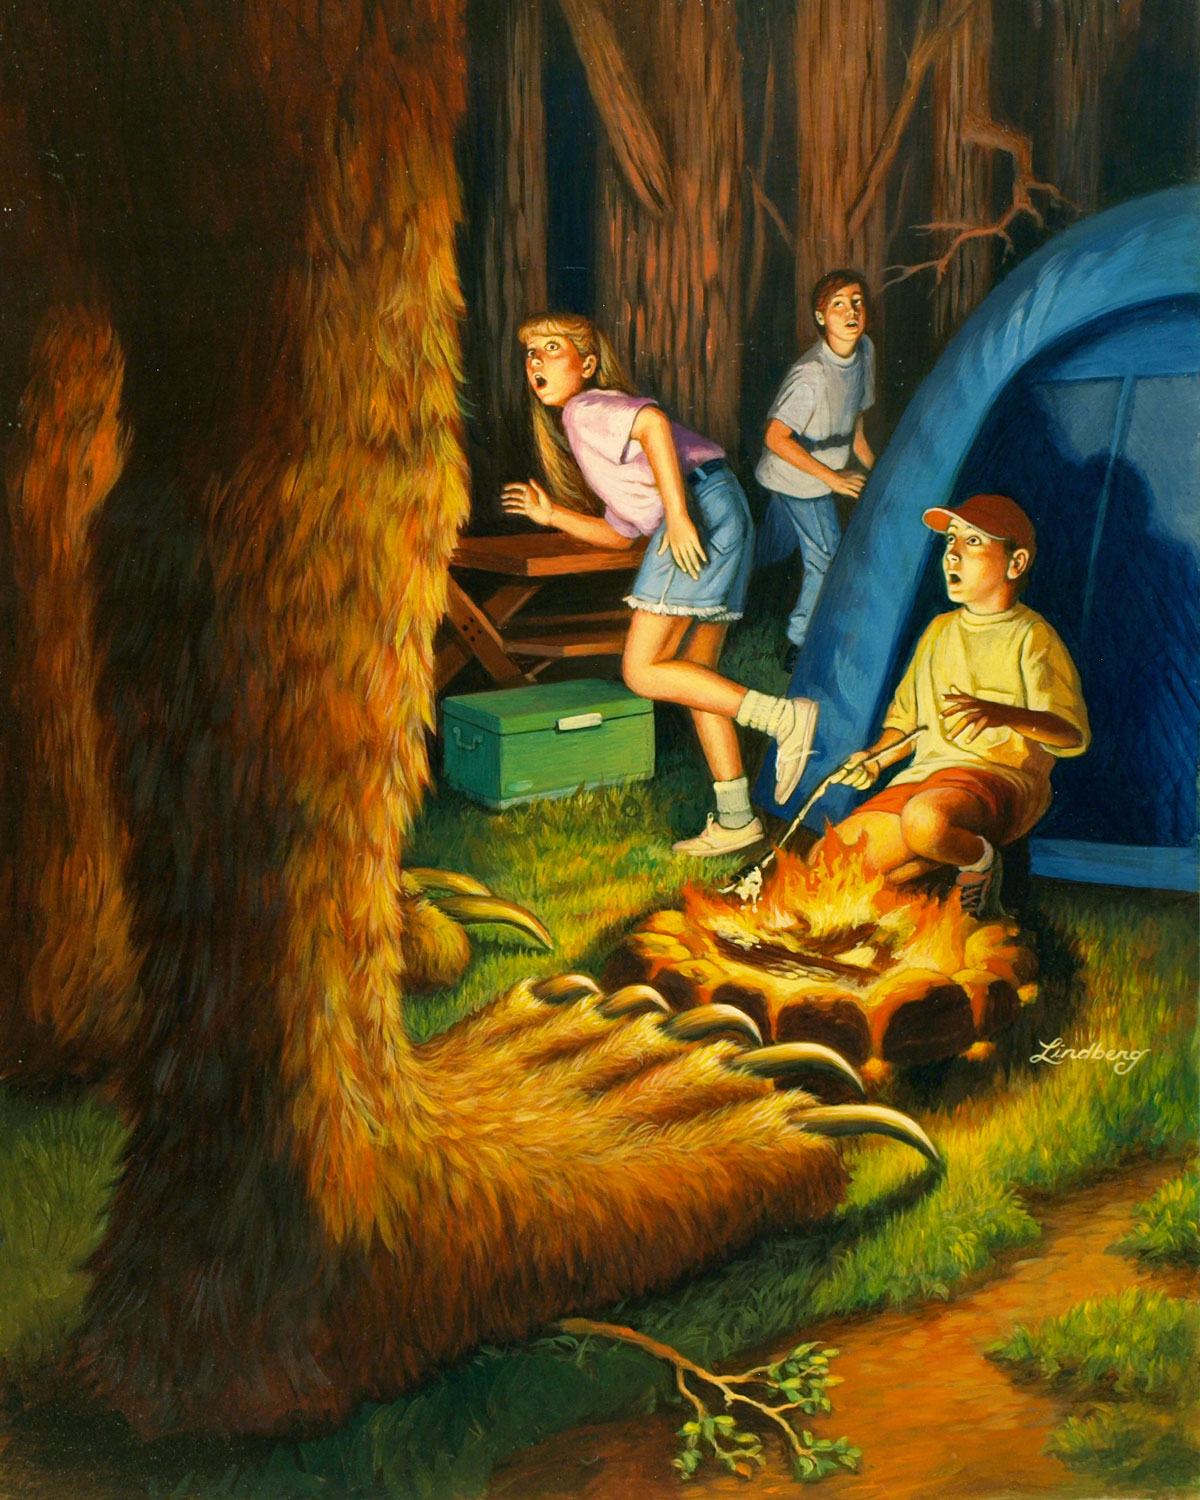 Adobe Portfolio children's illustration realistic illustration traditional painting  oil painting acrylic paniting  Horror Stories  fantasy book cover art